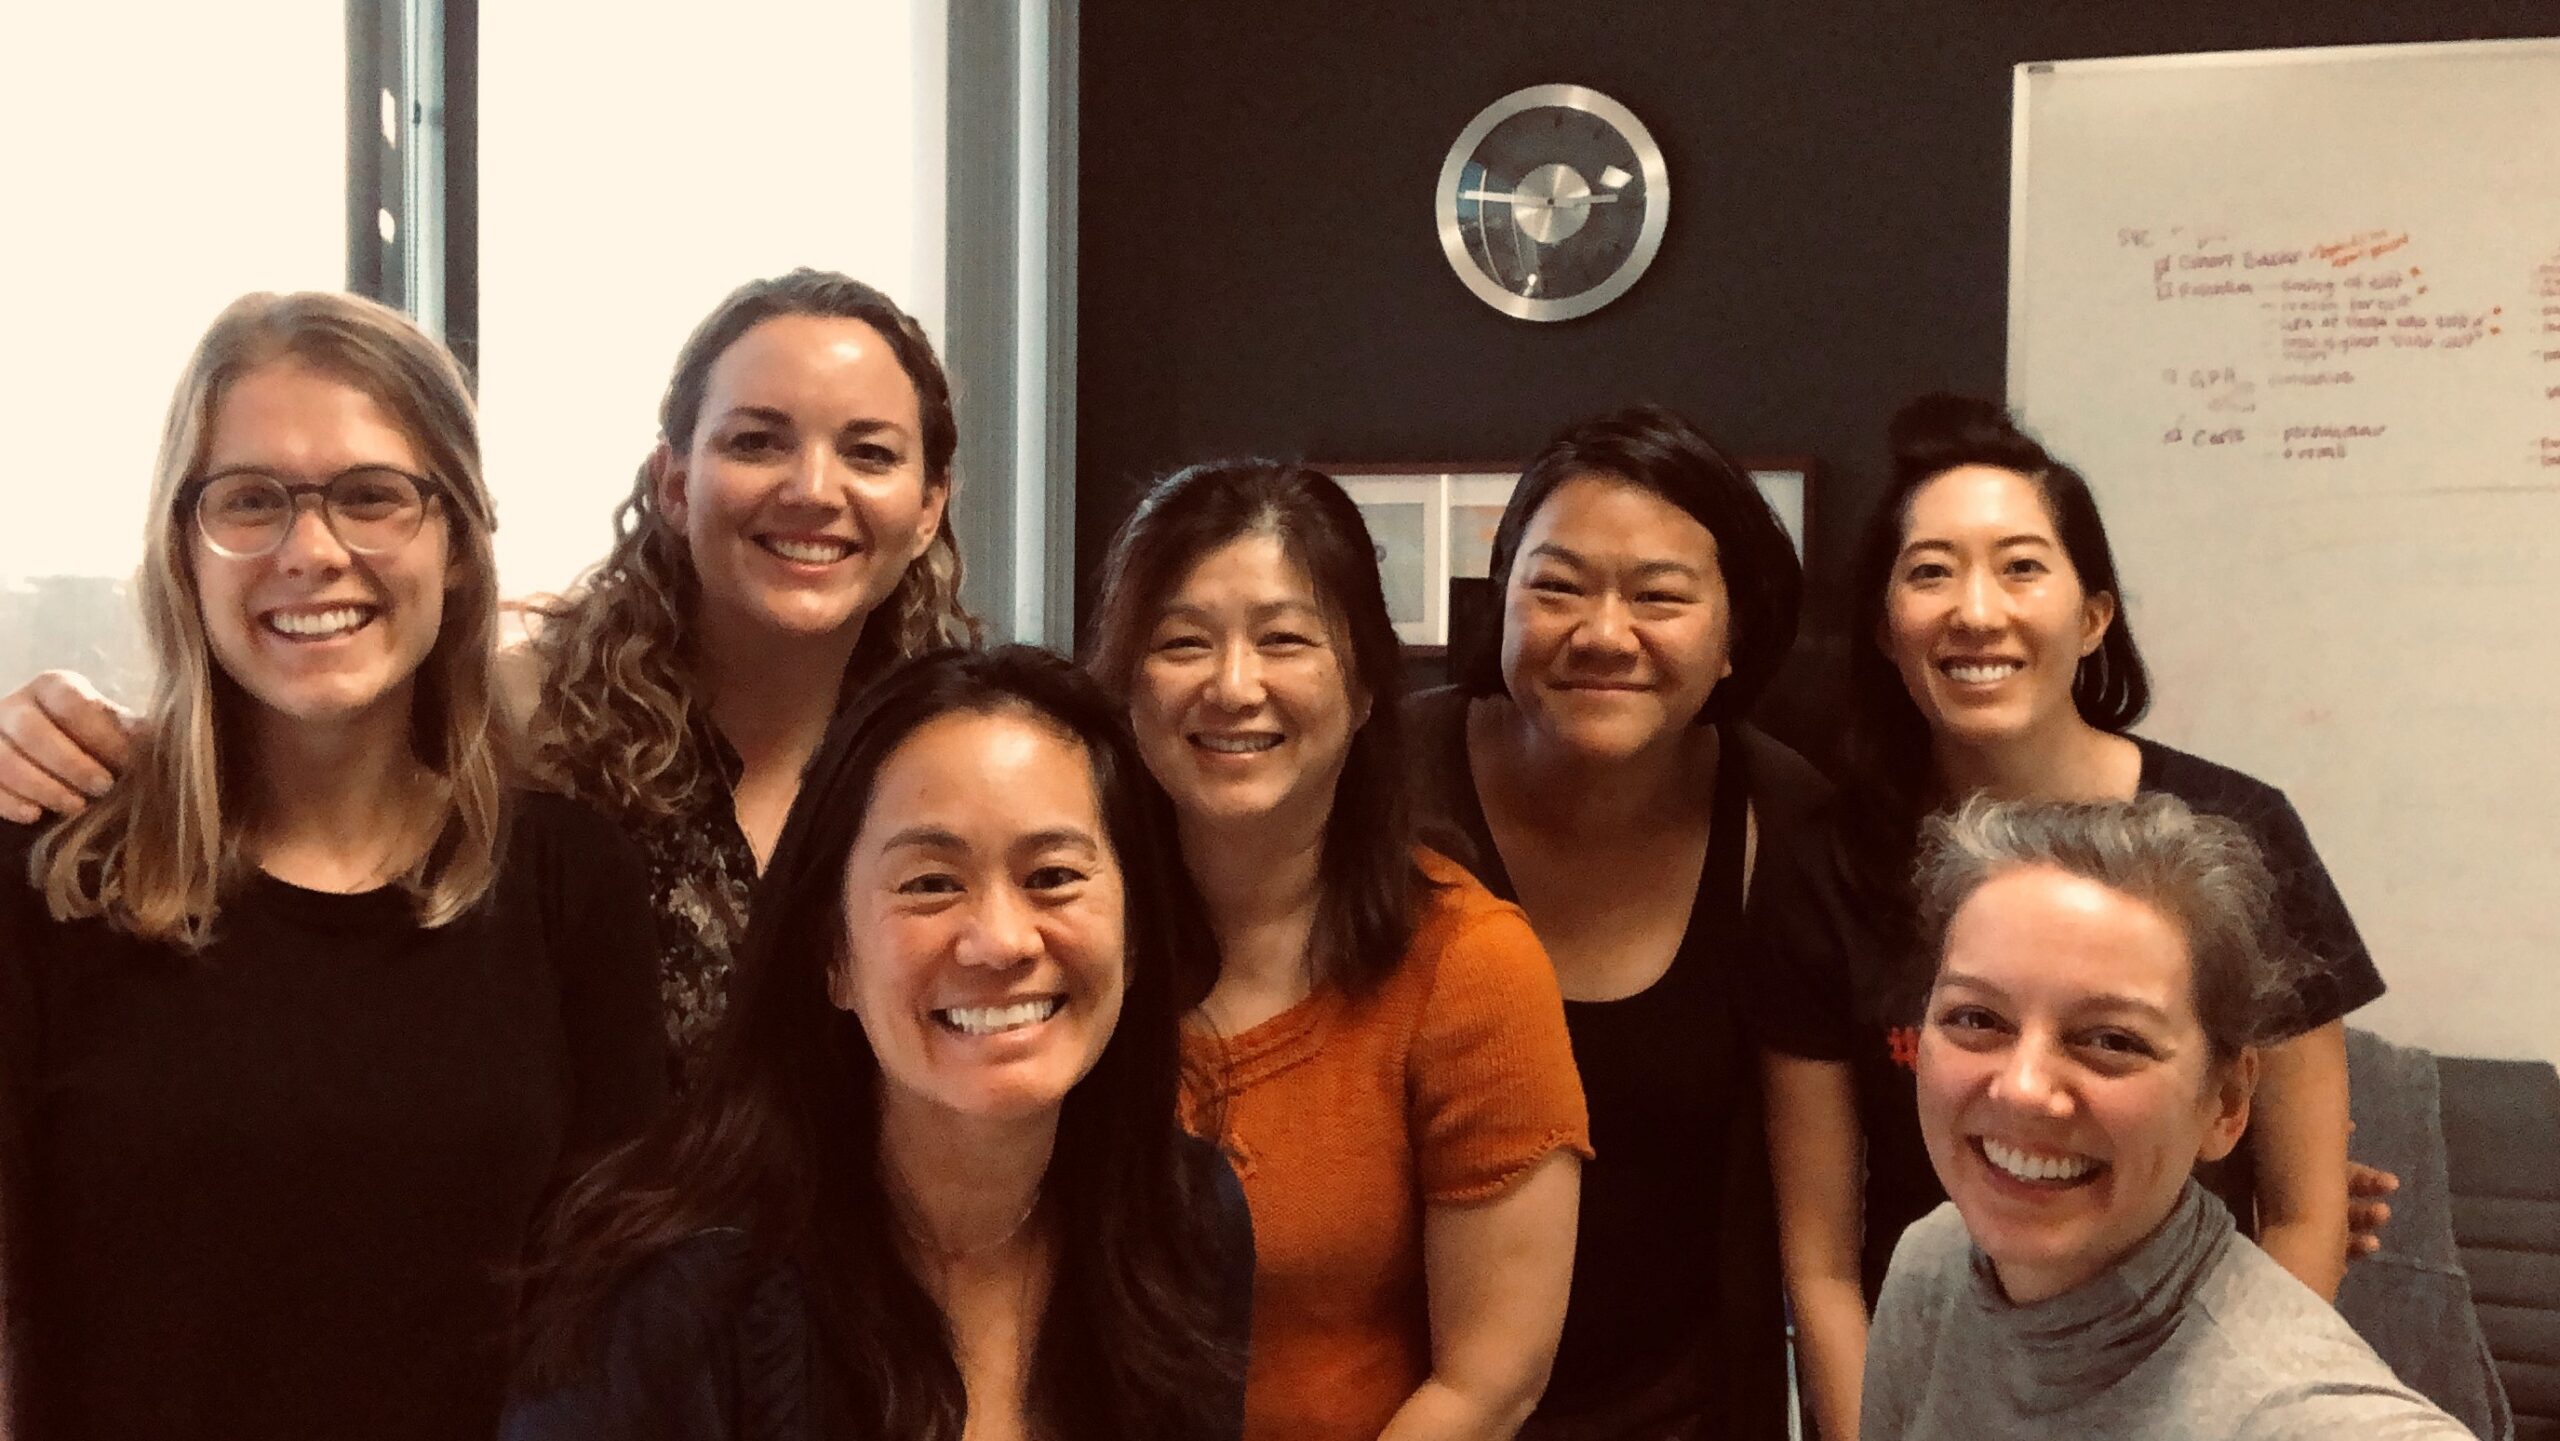 Seven women smiling in an office